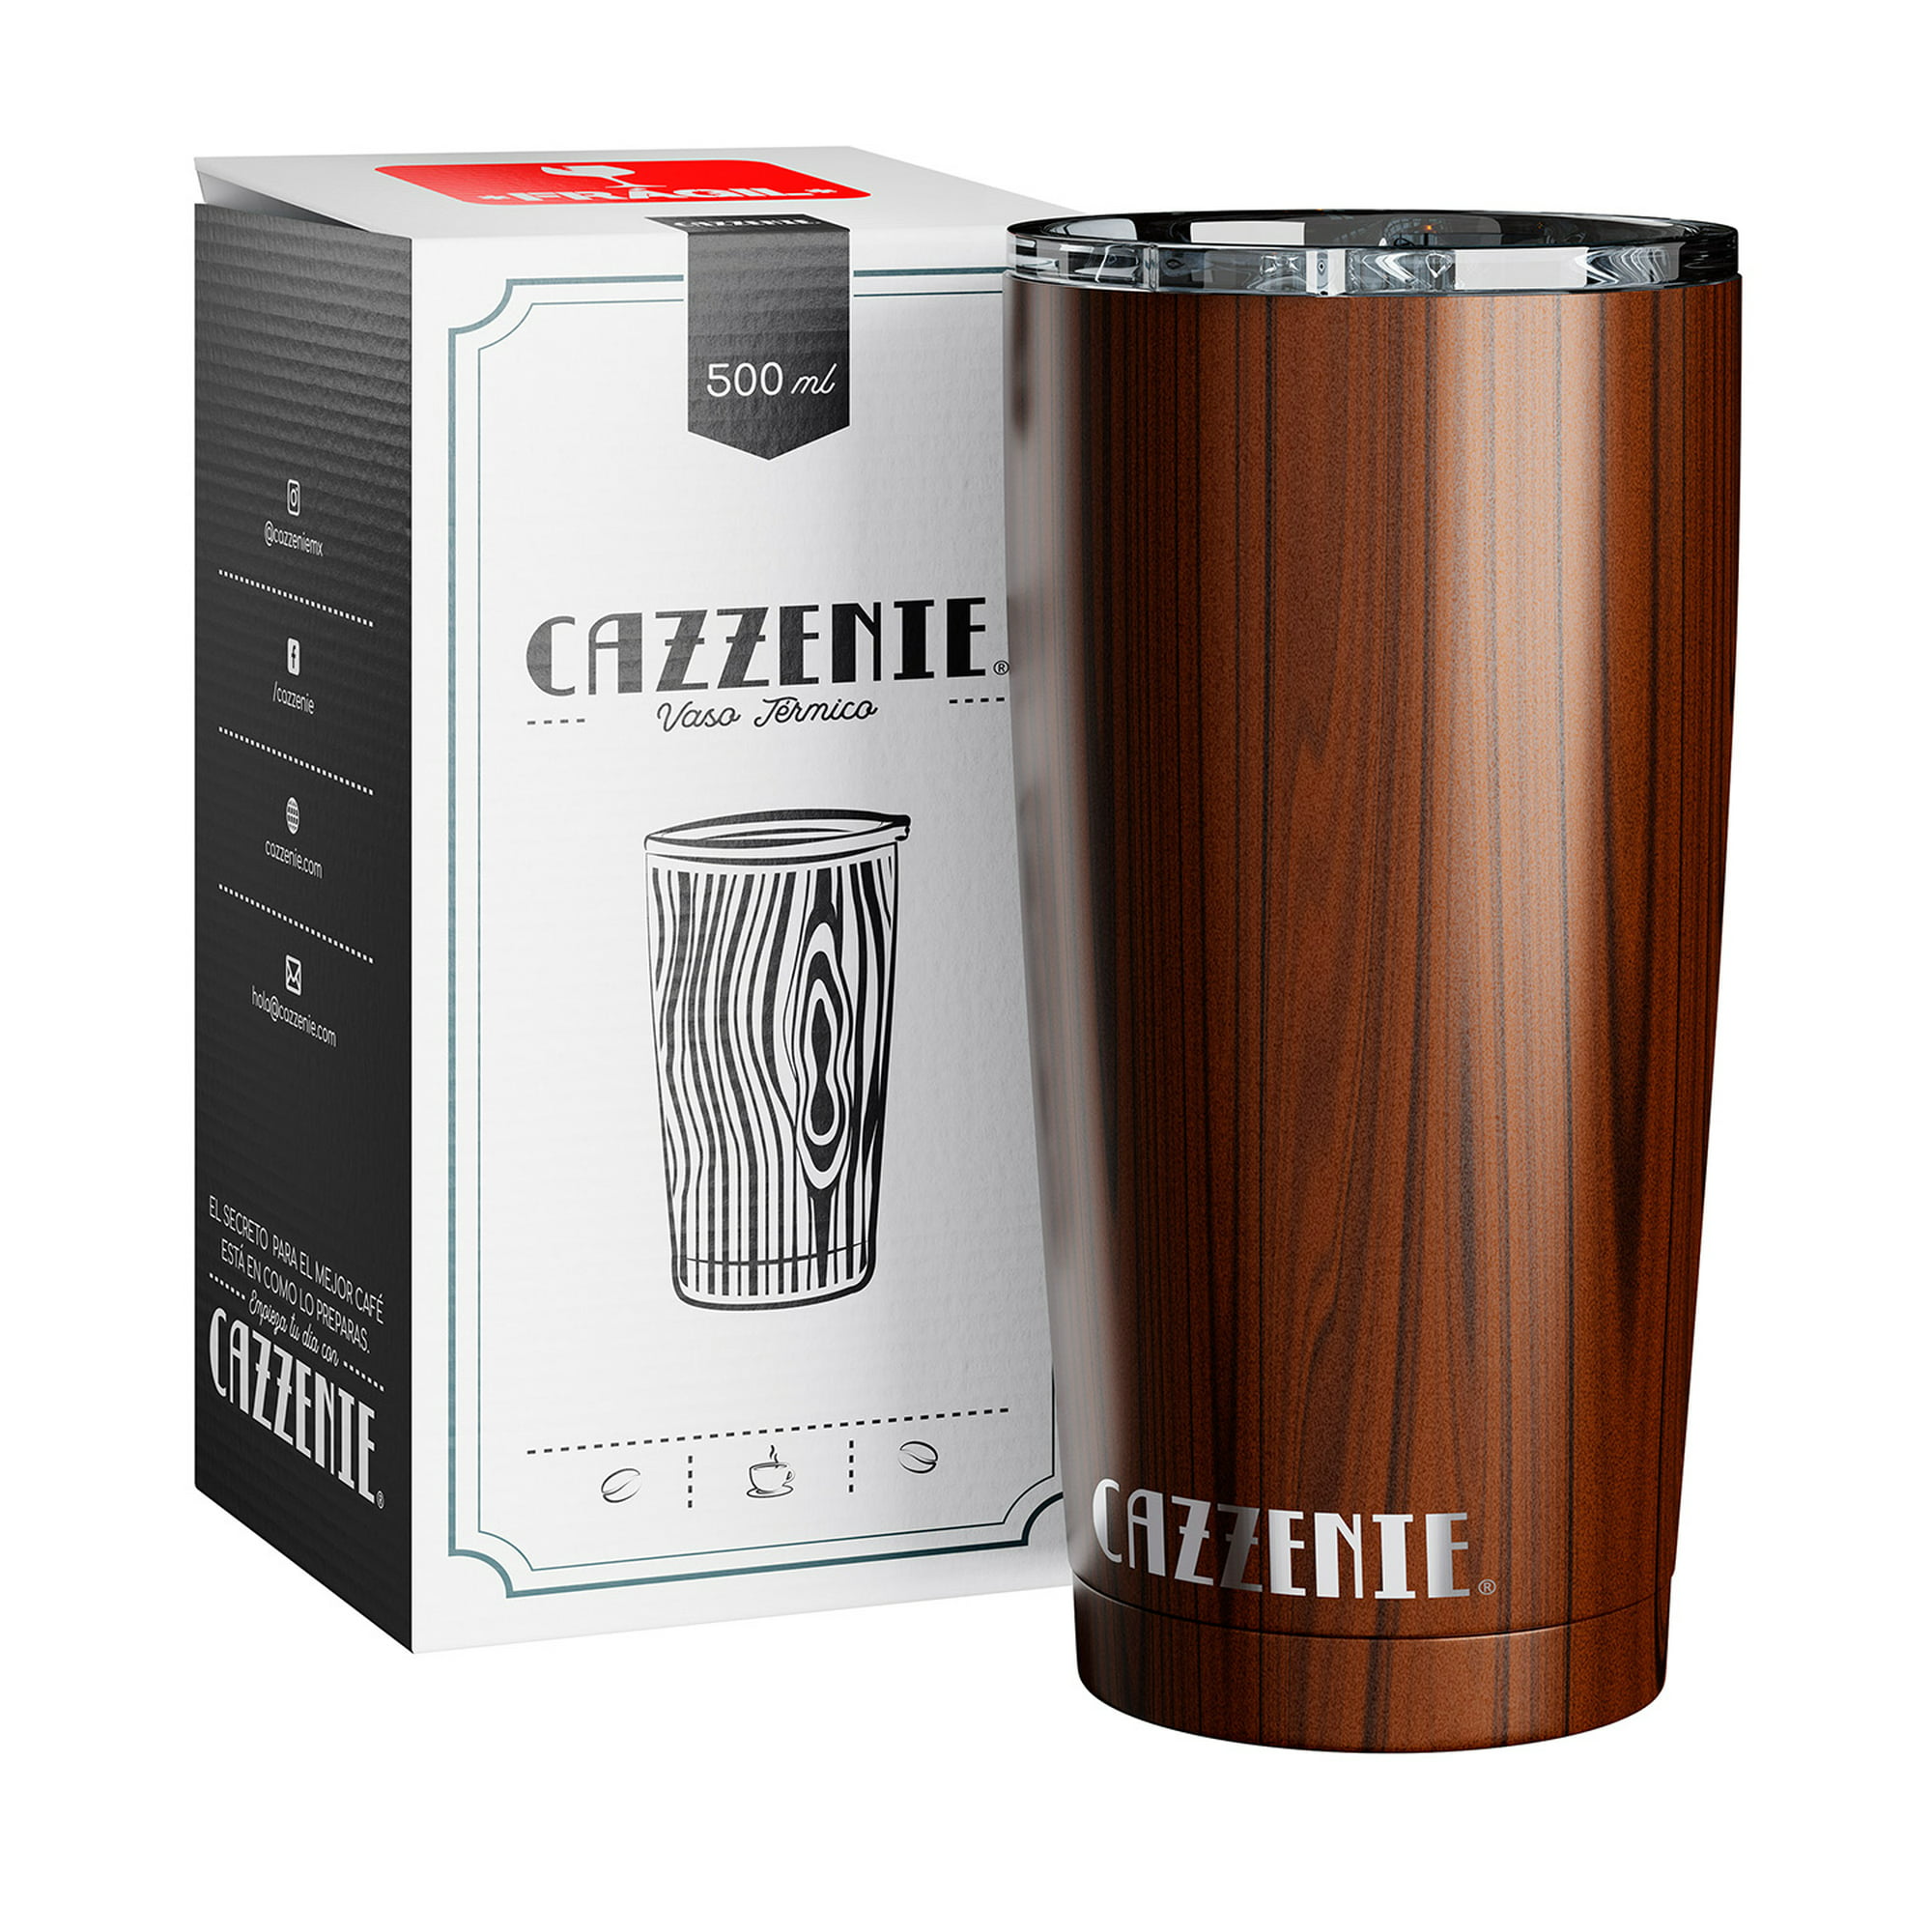 Thermo Glass - Mug translucido térmico para llevar café. – Lima con Cafeina